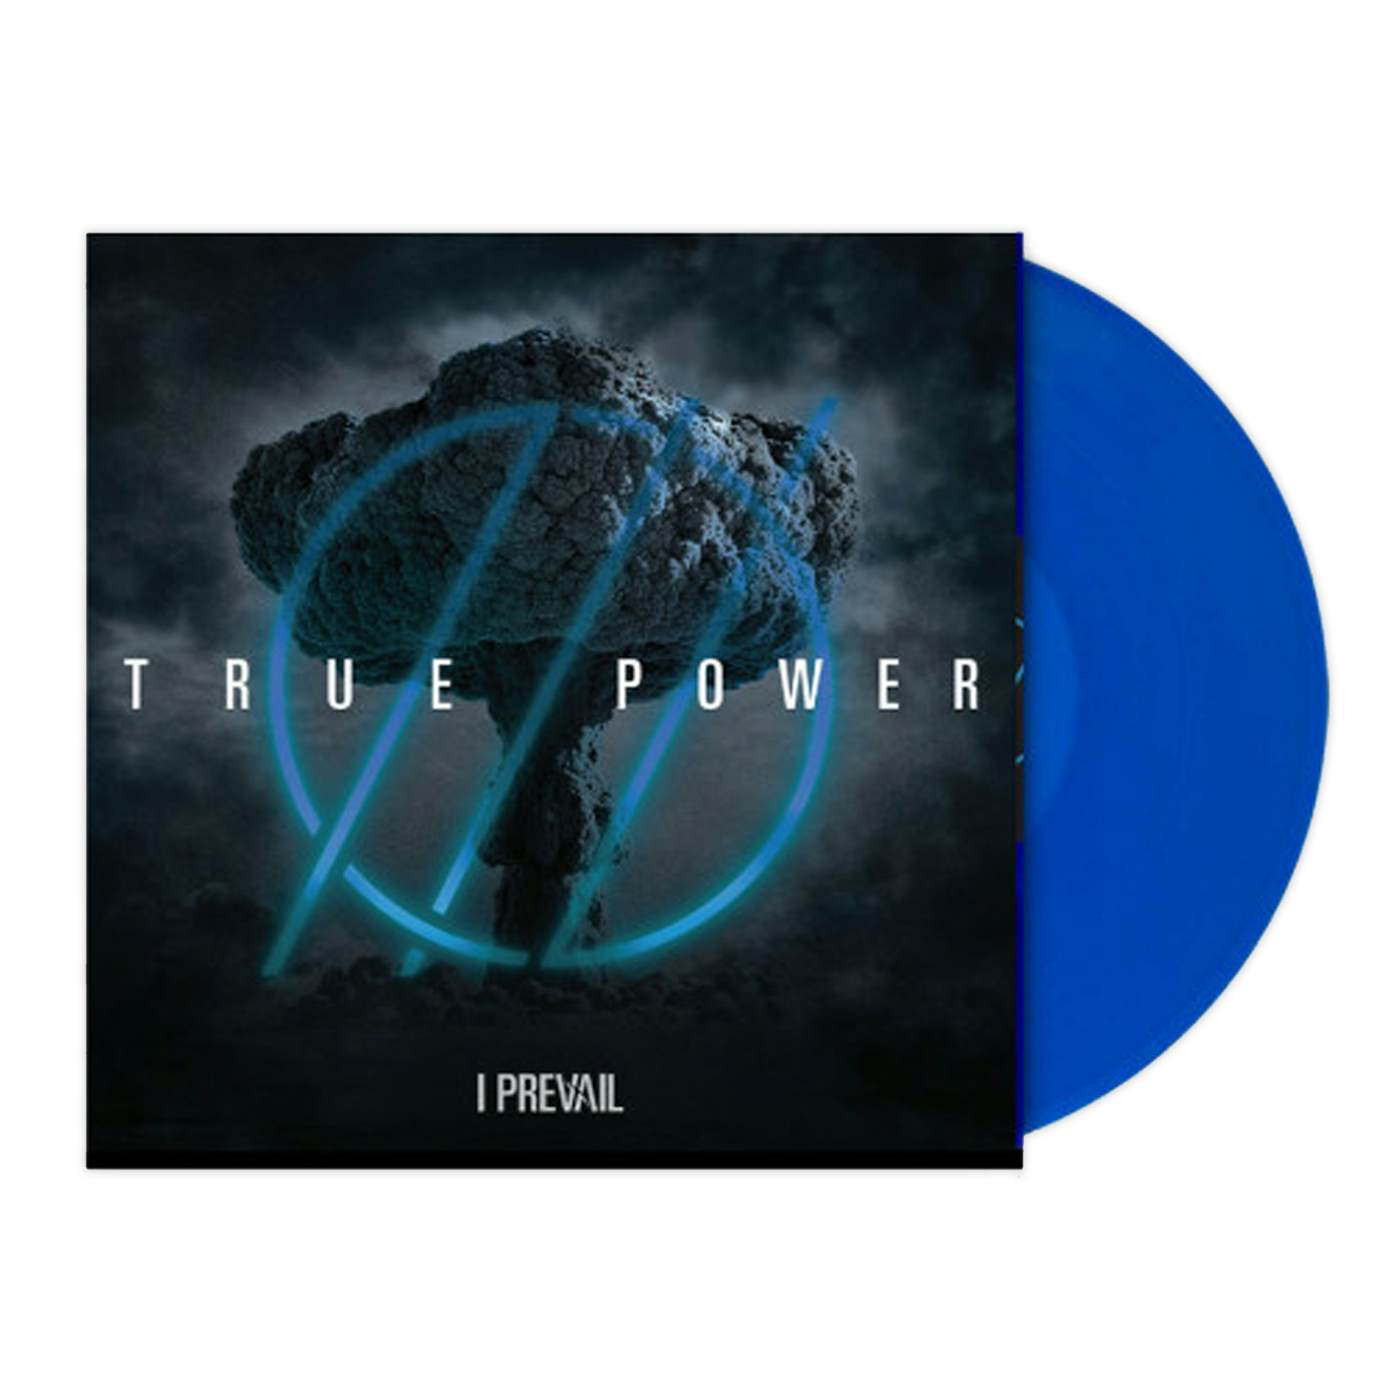 I Prevail - "True Power" LP (Vinyl)